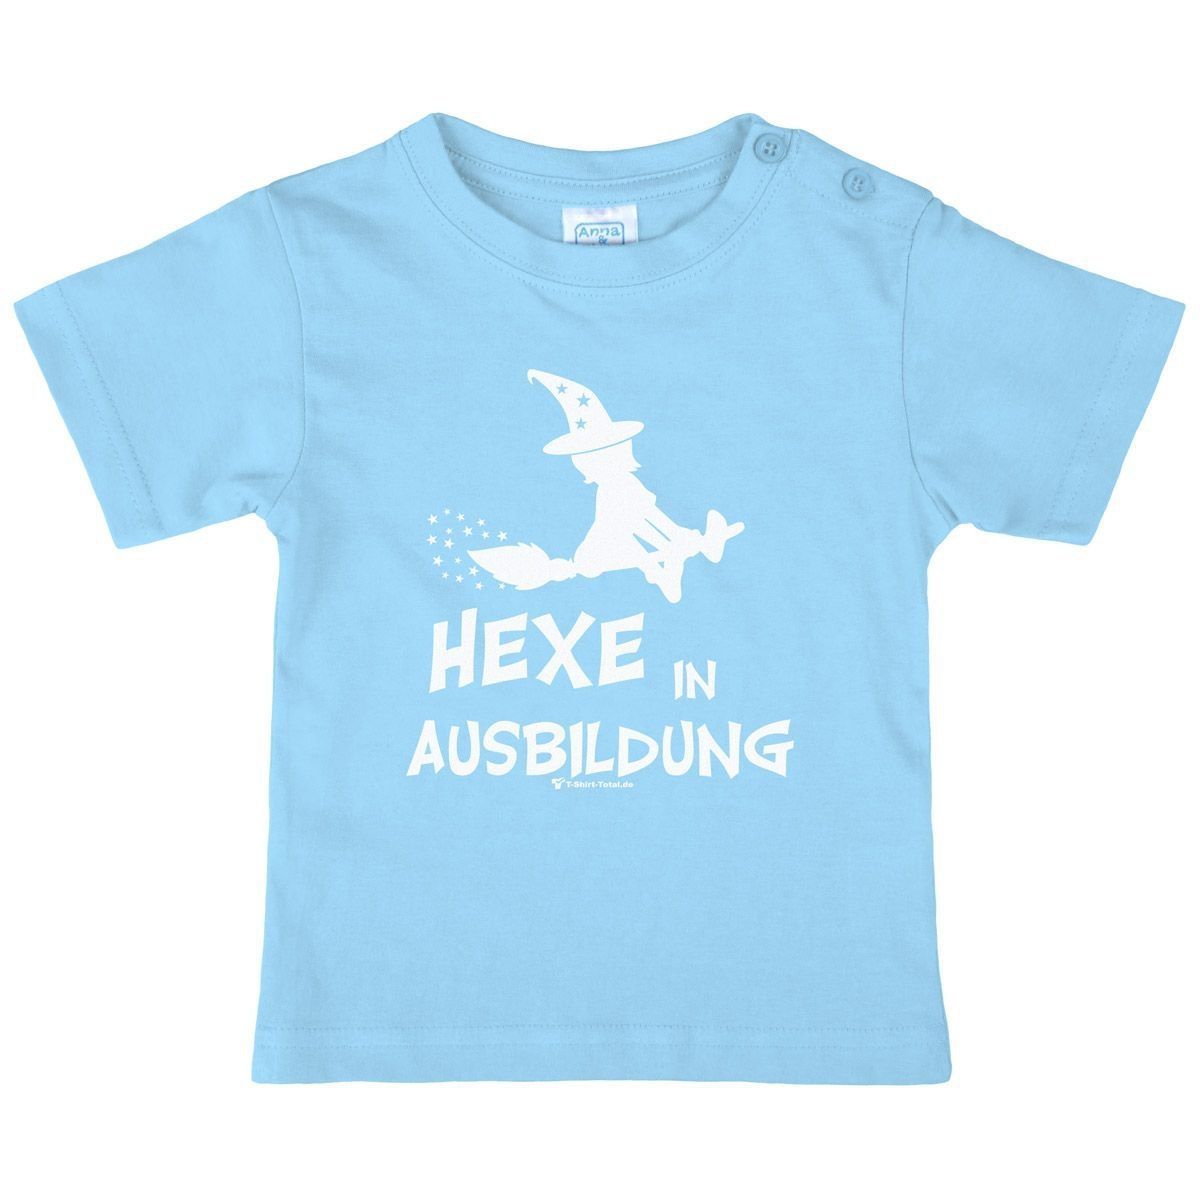 Hexe in Ausbildung Kinder T-Shirt hellblau 80 / 86